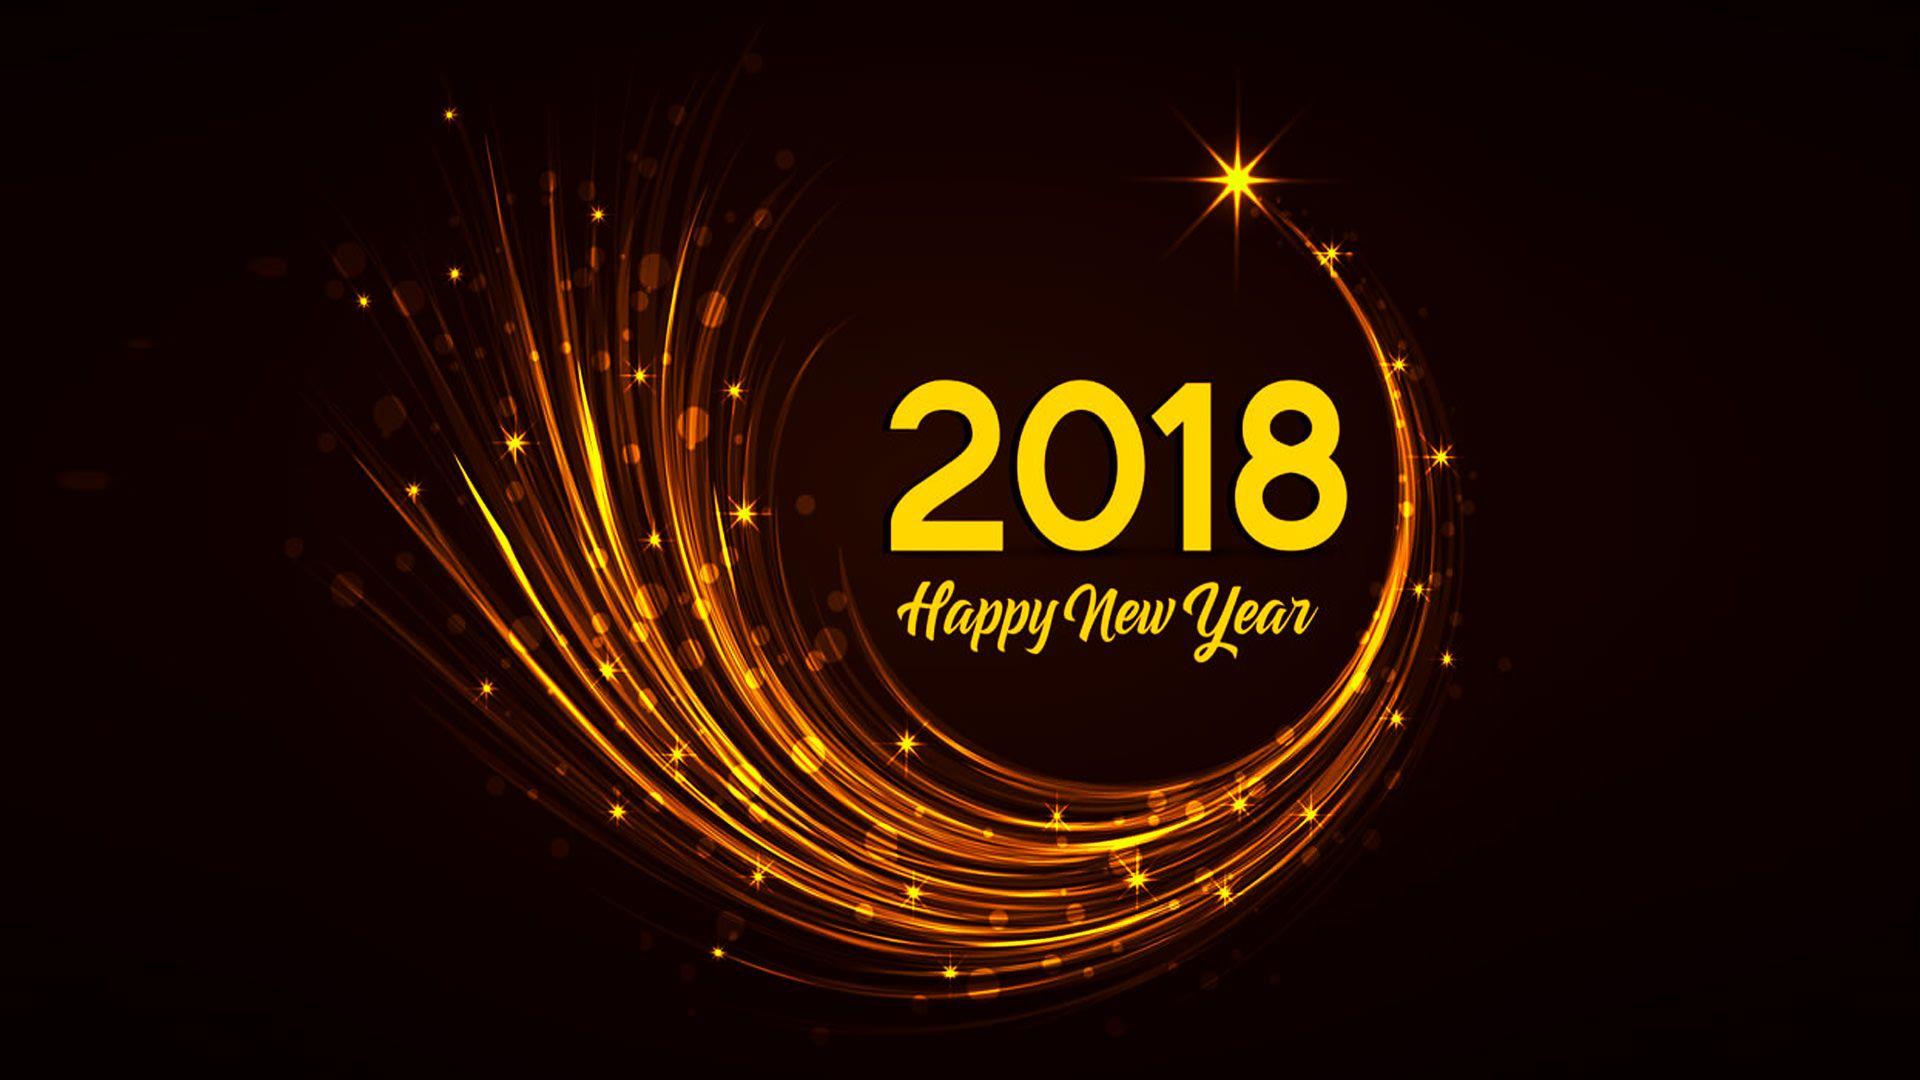 Special Happy New Year 2018 Wallpaper, HD Greetings Desktop Image